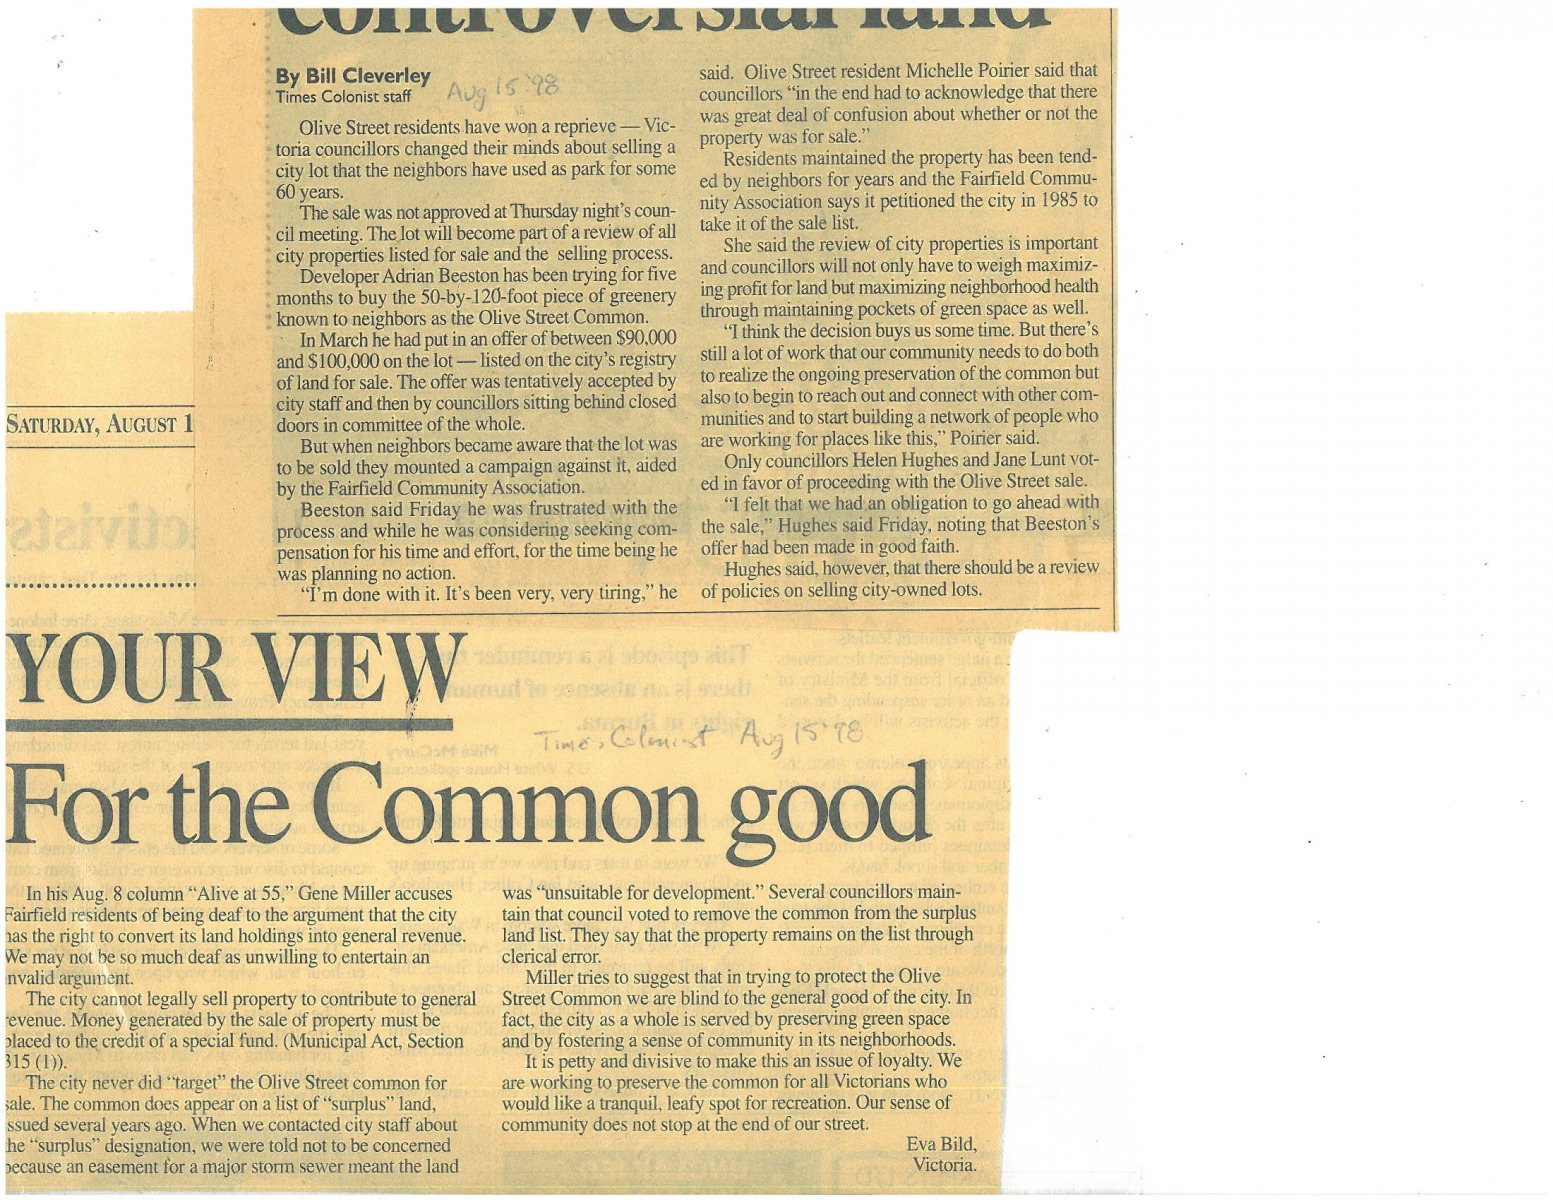 Aug-15-1998-City-Changes-Mind-For-the-Common-Good-Eva-Bild-letter-Times-Colonist-RESCAN-1